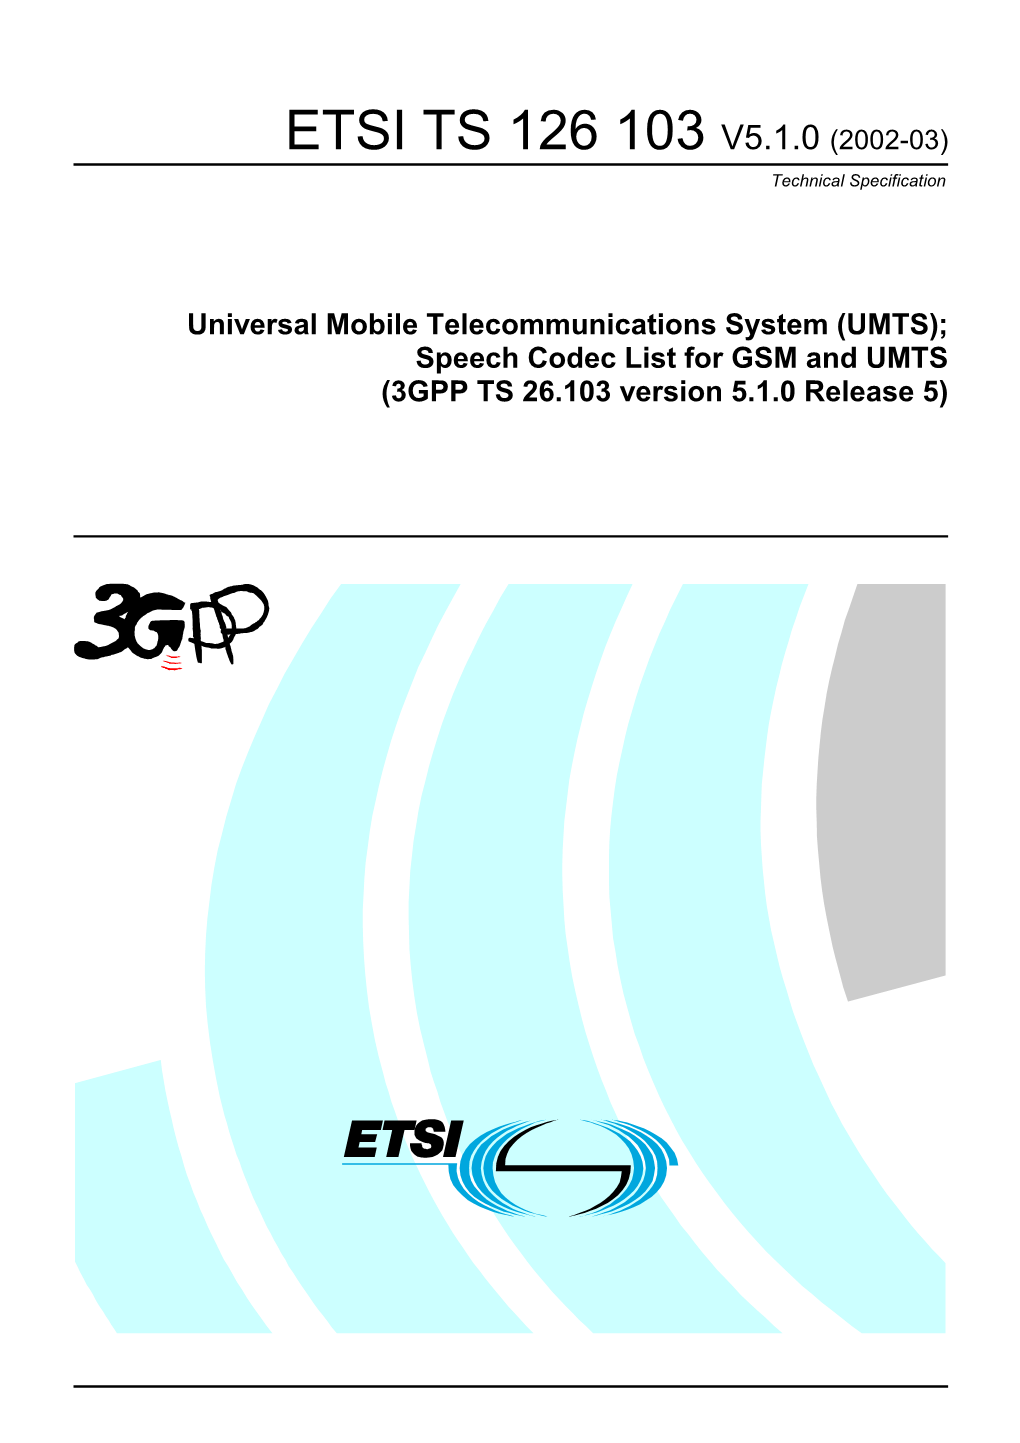 UMTS); Speech Codec List for GSM and UMTS (3GPP TS 26.103 Version 5.1.0 Release 5) 3GPP TS 26.103 Version 5.1.0 Release 5 1 ETSI TS 126 103 V5.1.0 (2002-03)